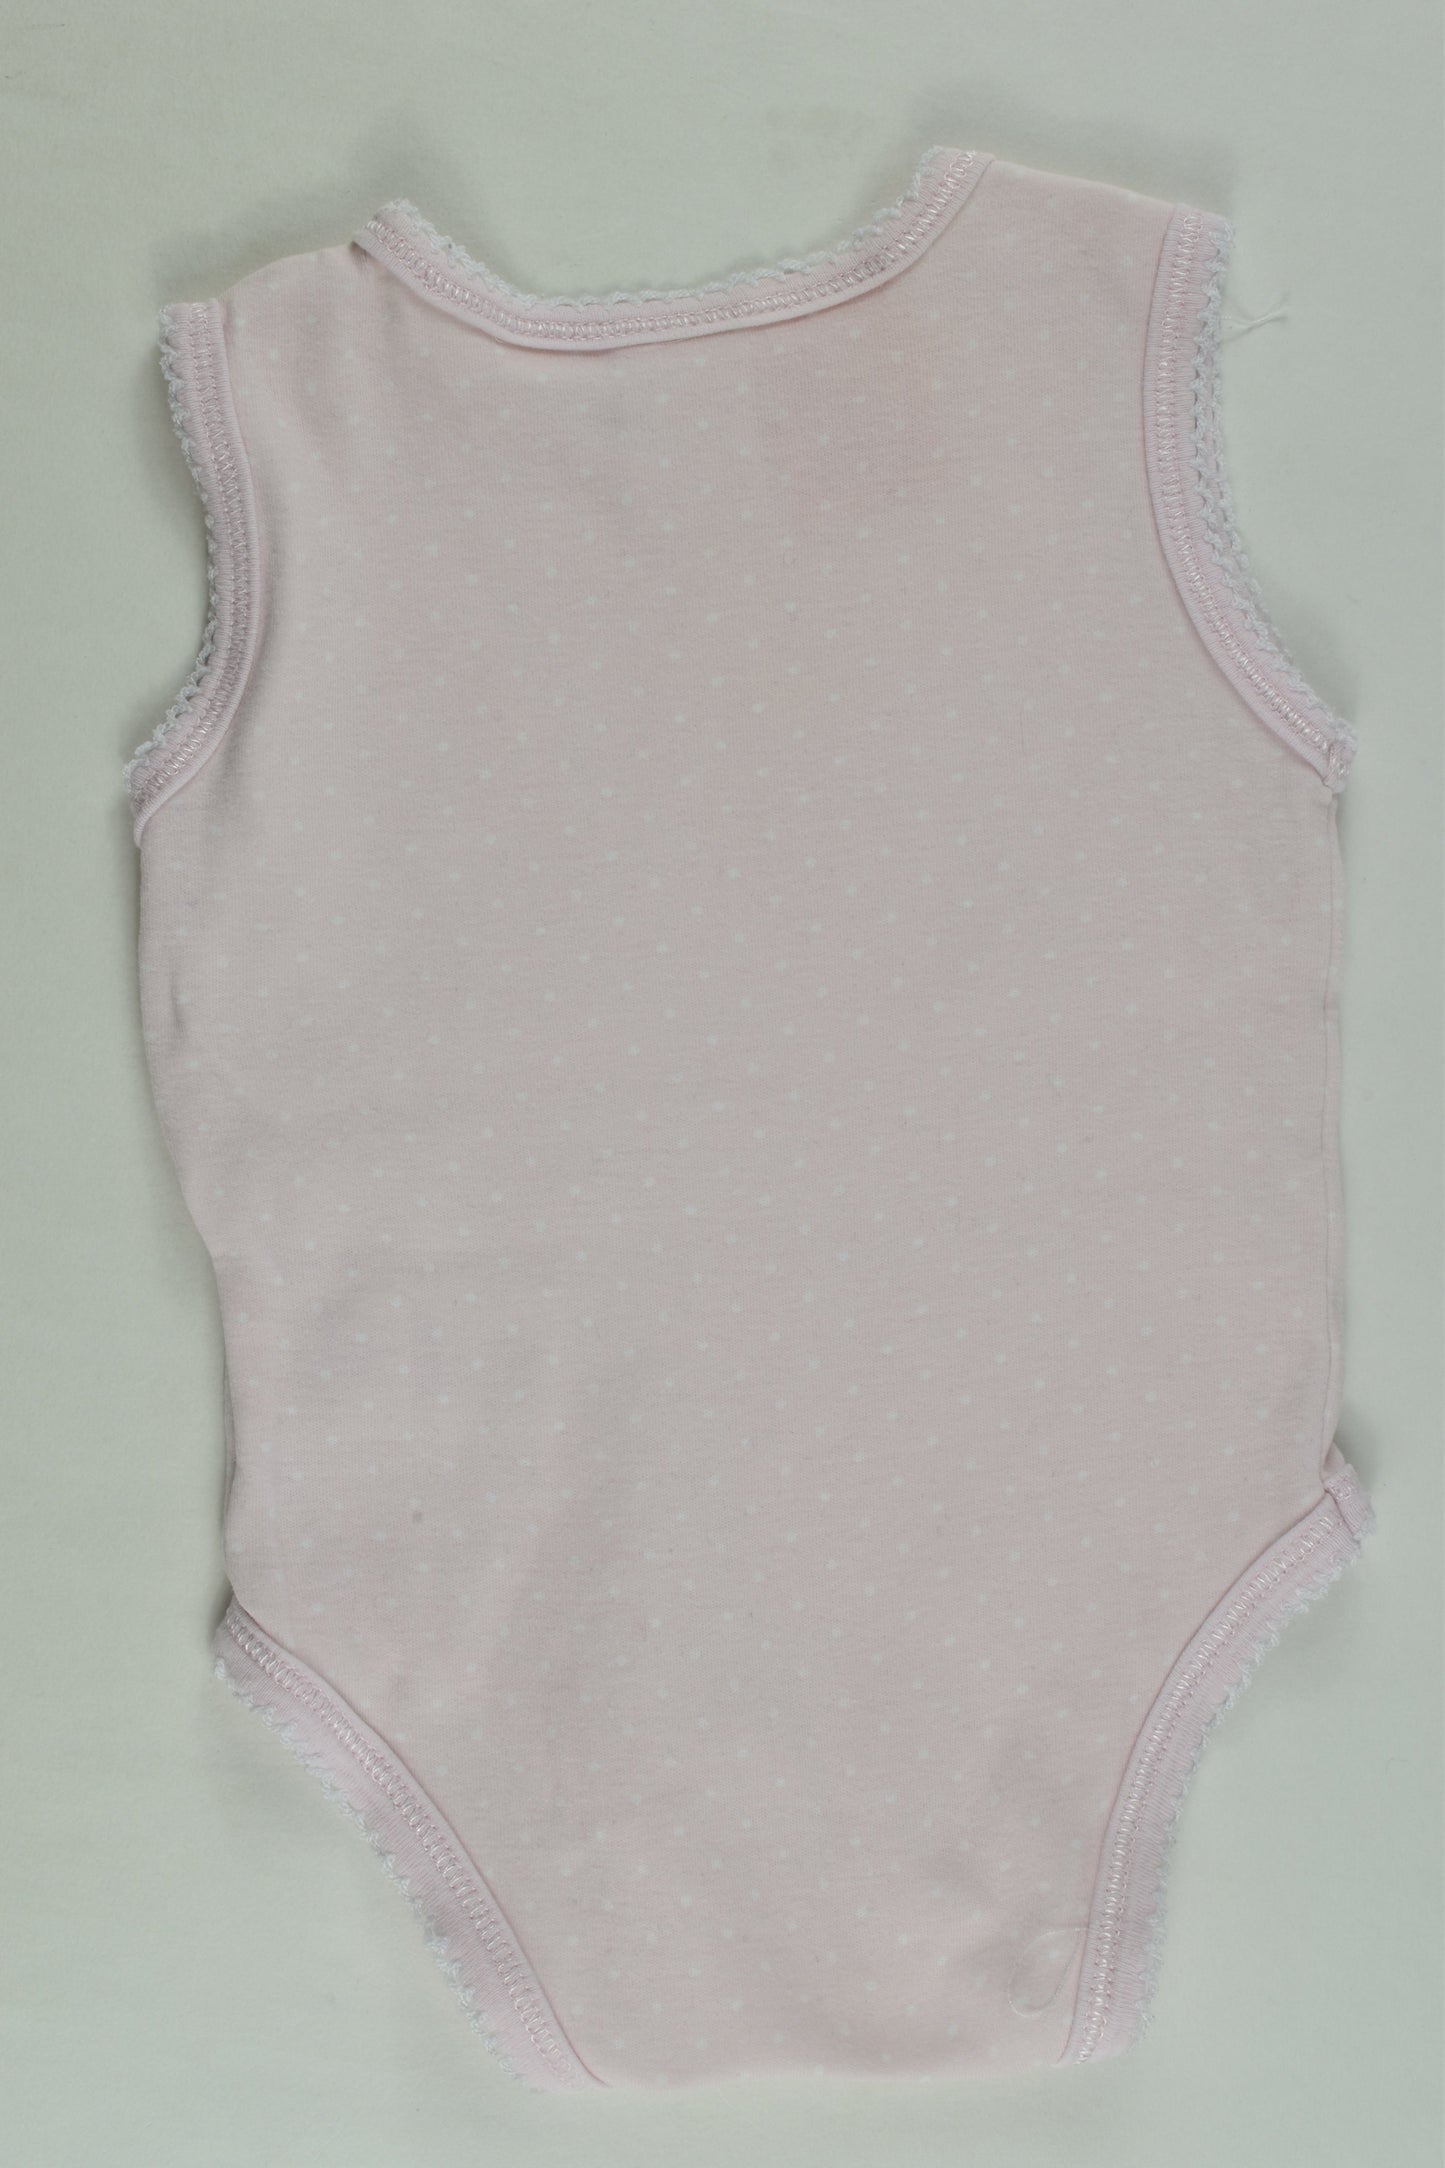 Baby Patch Size 00 Bodysuit